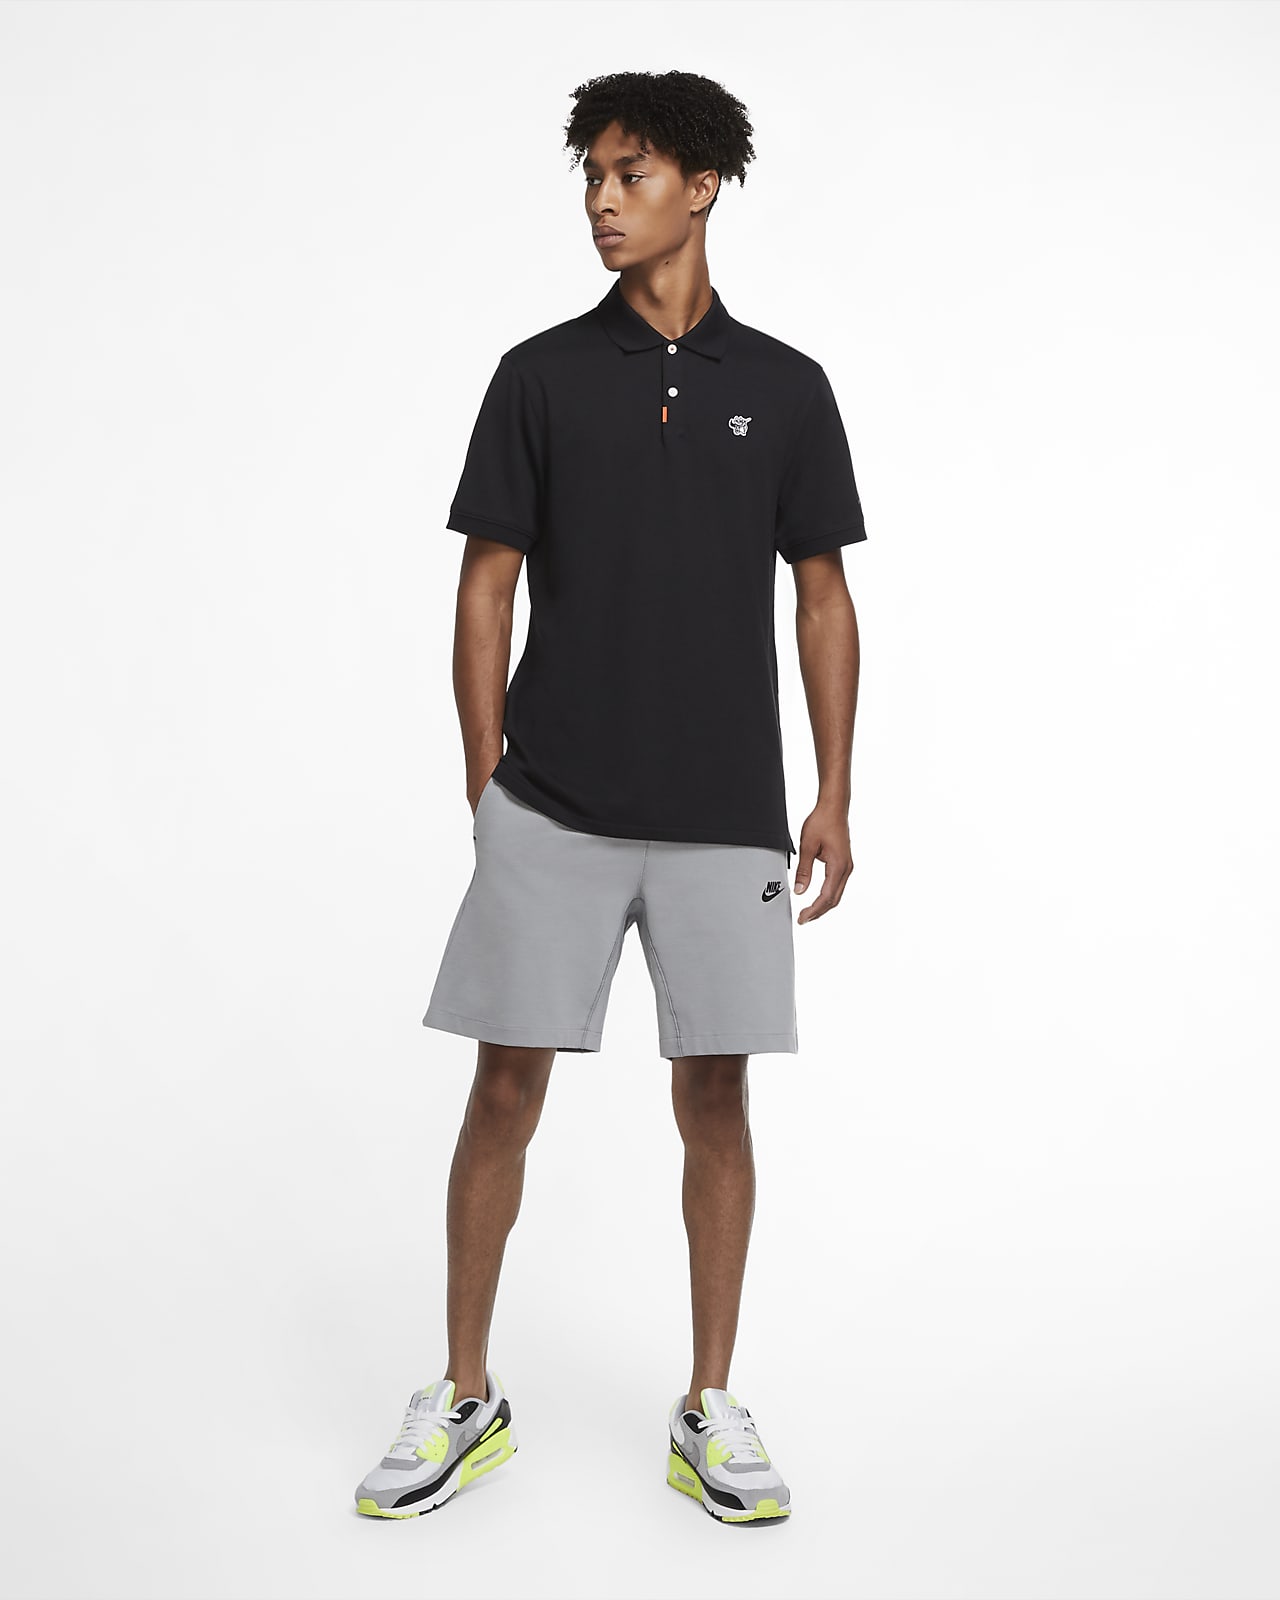 The Nike Polo Naomi Osaka 